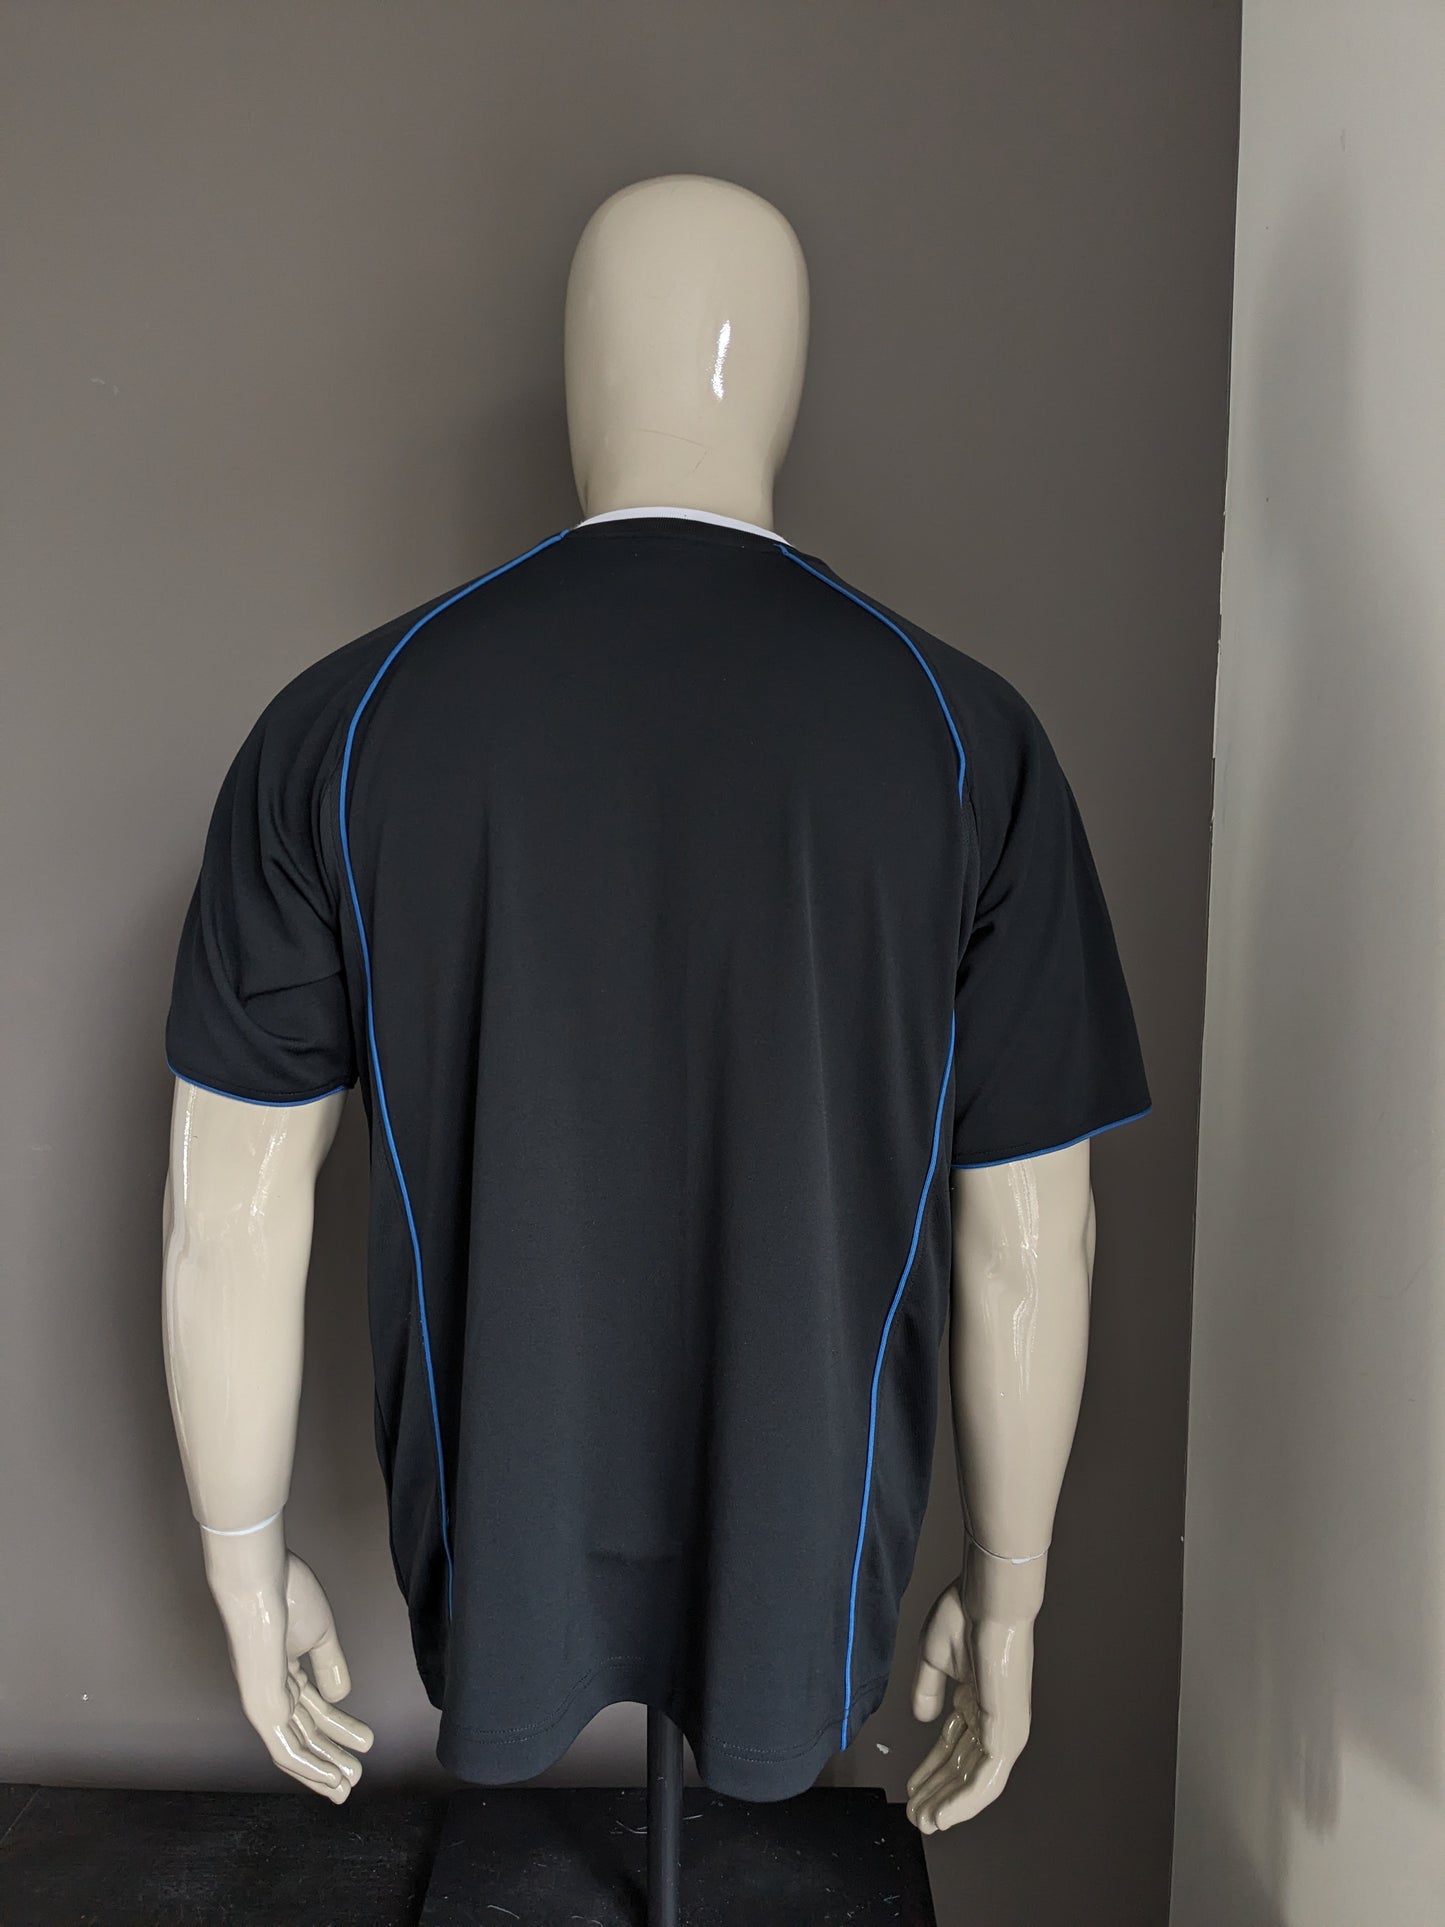 Vintage Kappa Sport shirt with V-neck. Black colored. Size M / L.